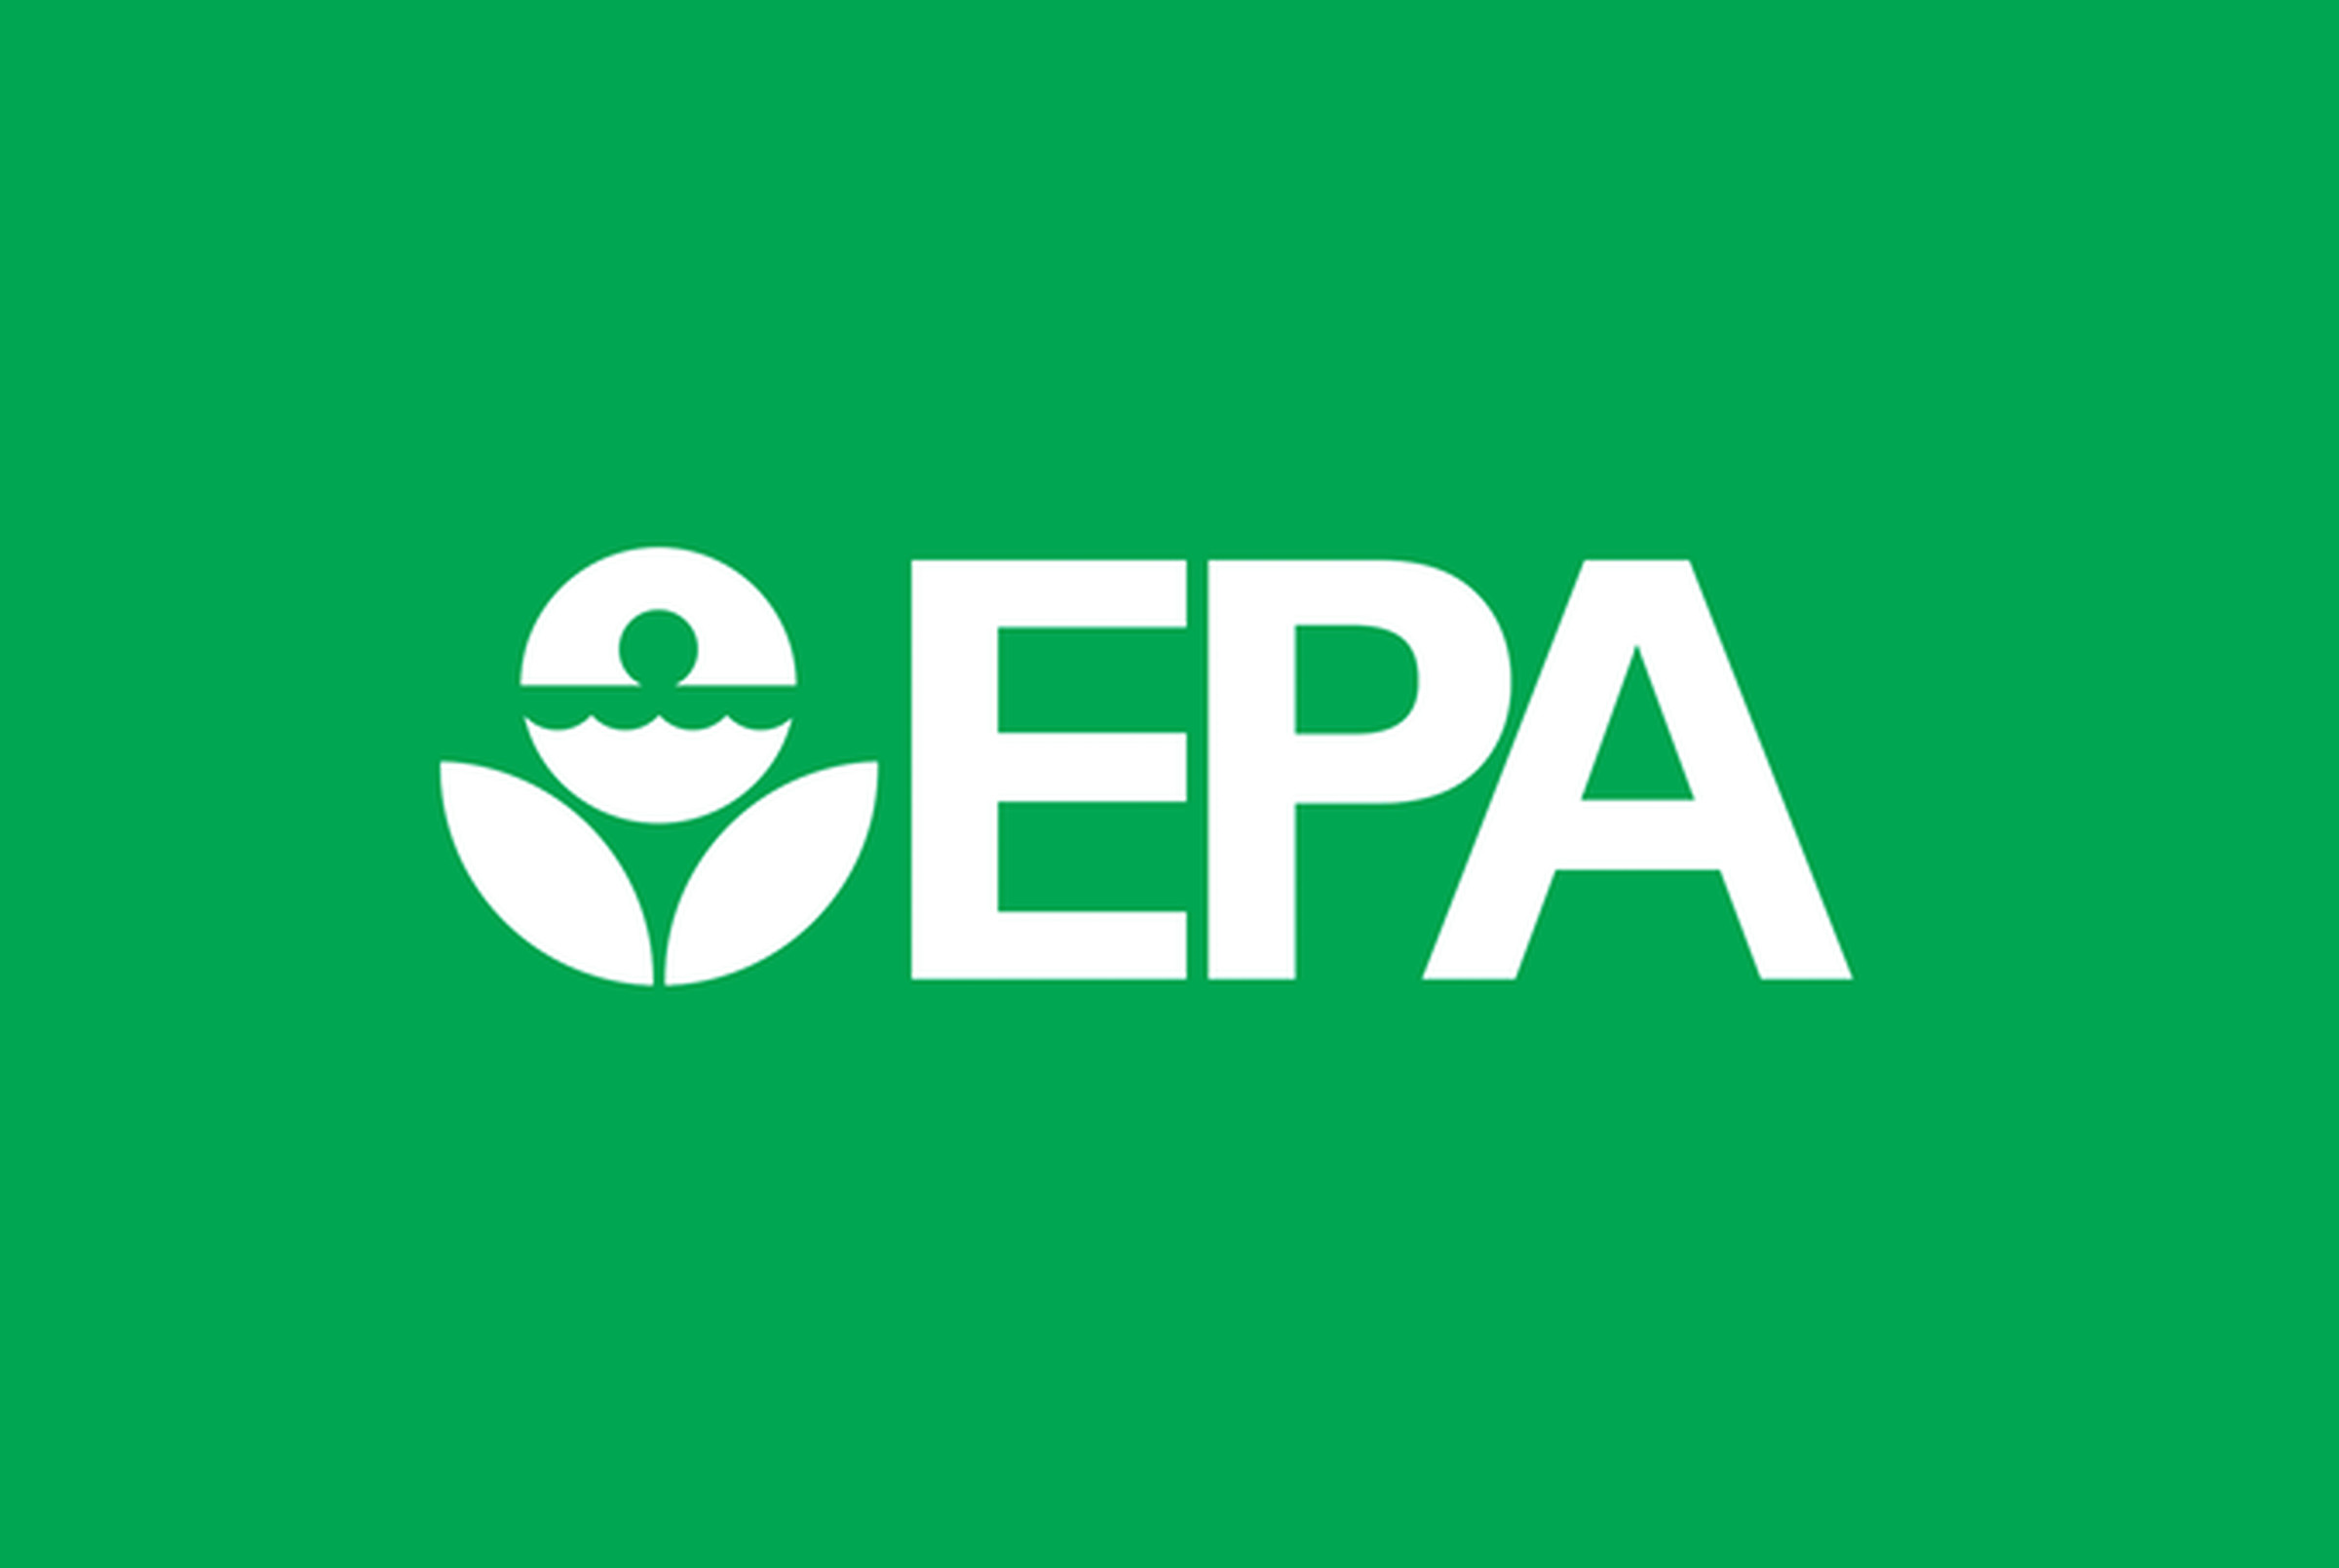 EPA logo, Chermayeff & Geismar, 1977.